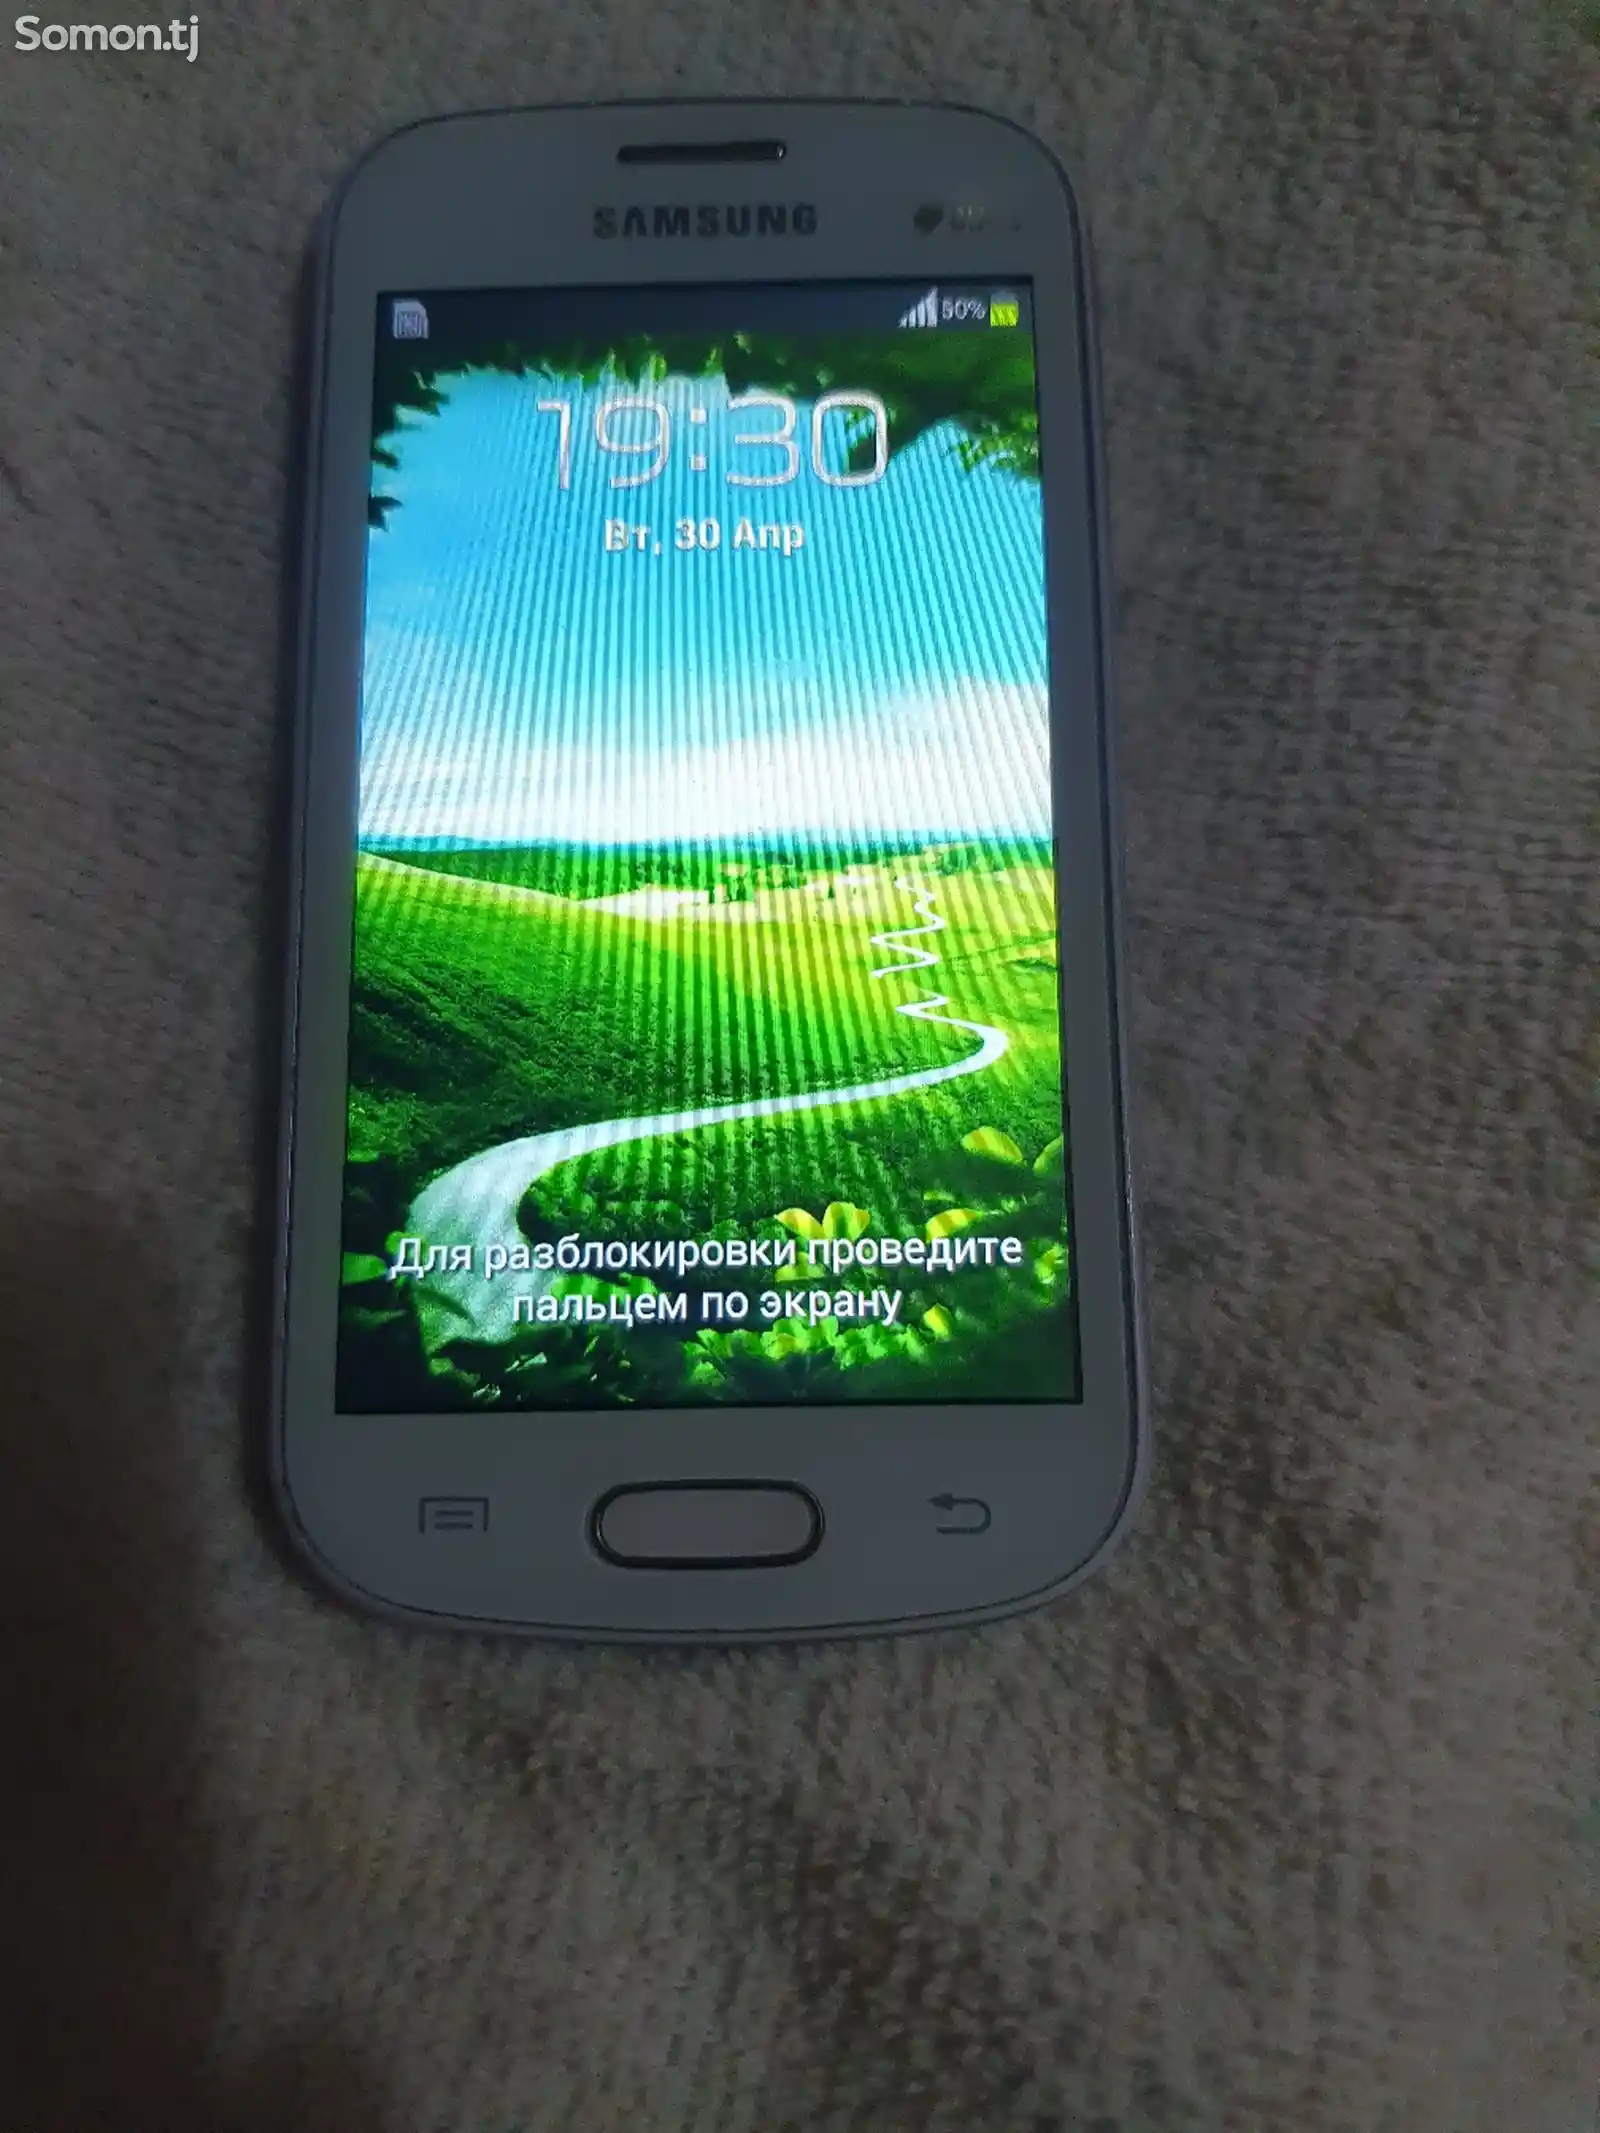 Samsung Galaxy 7390 Duos-3